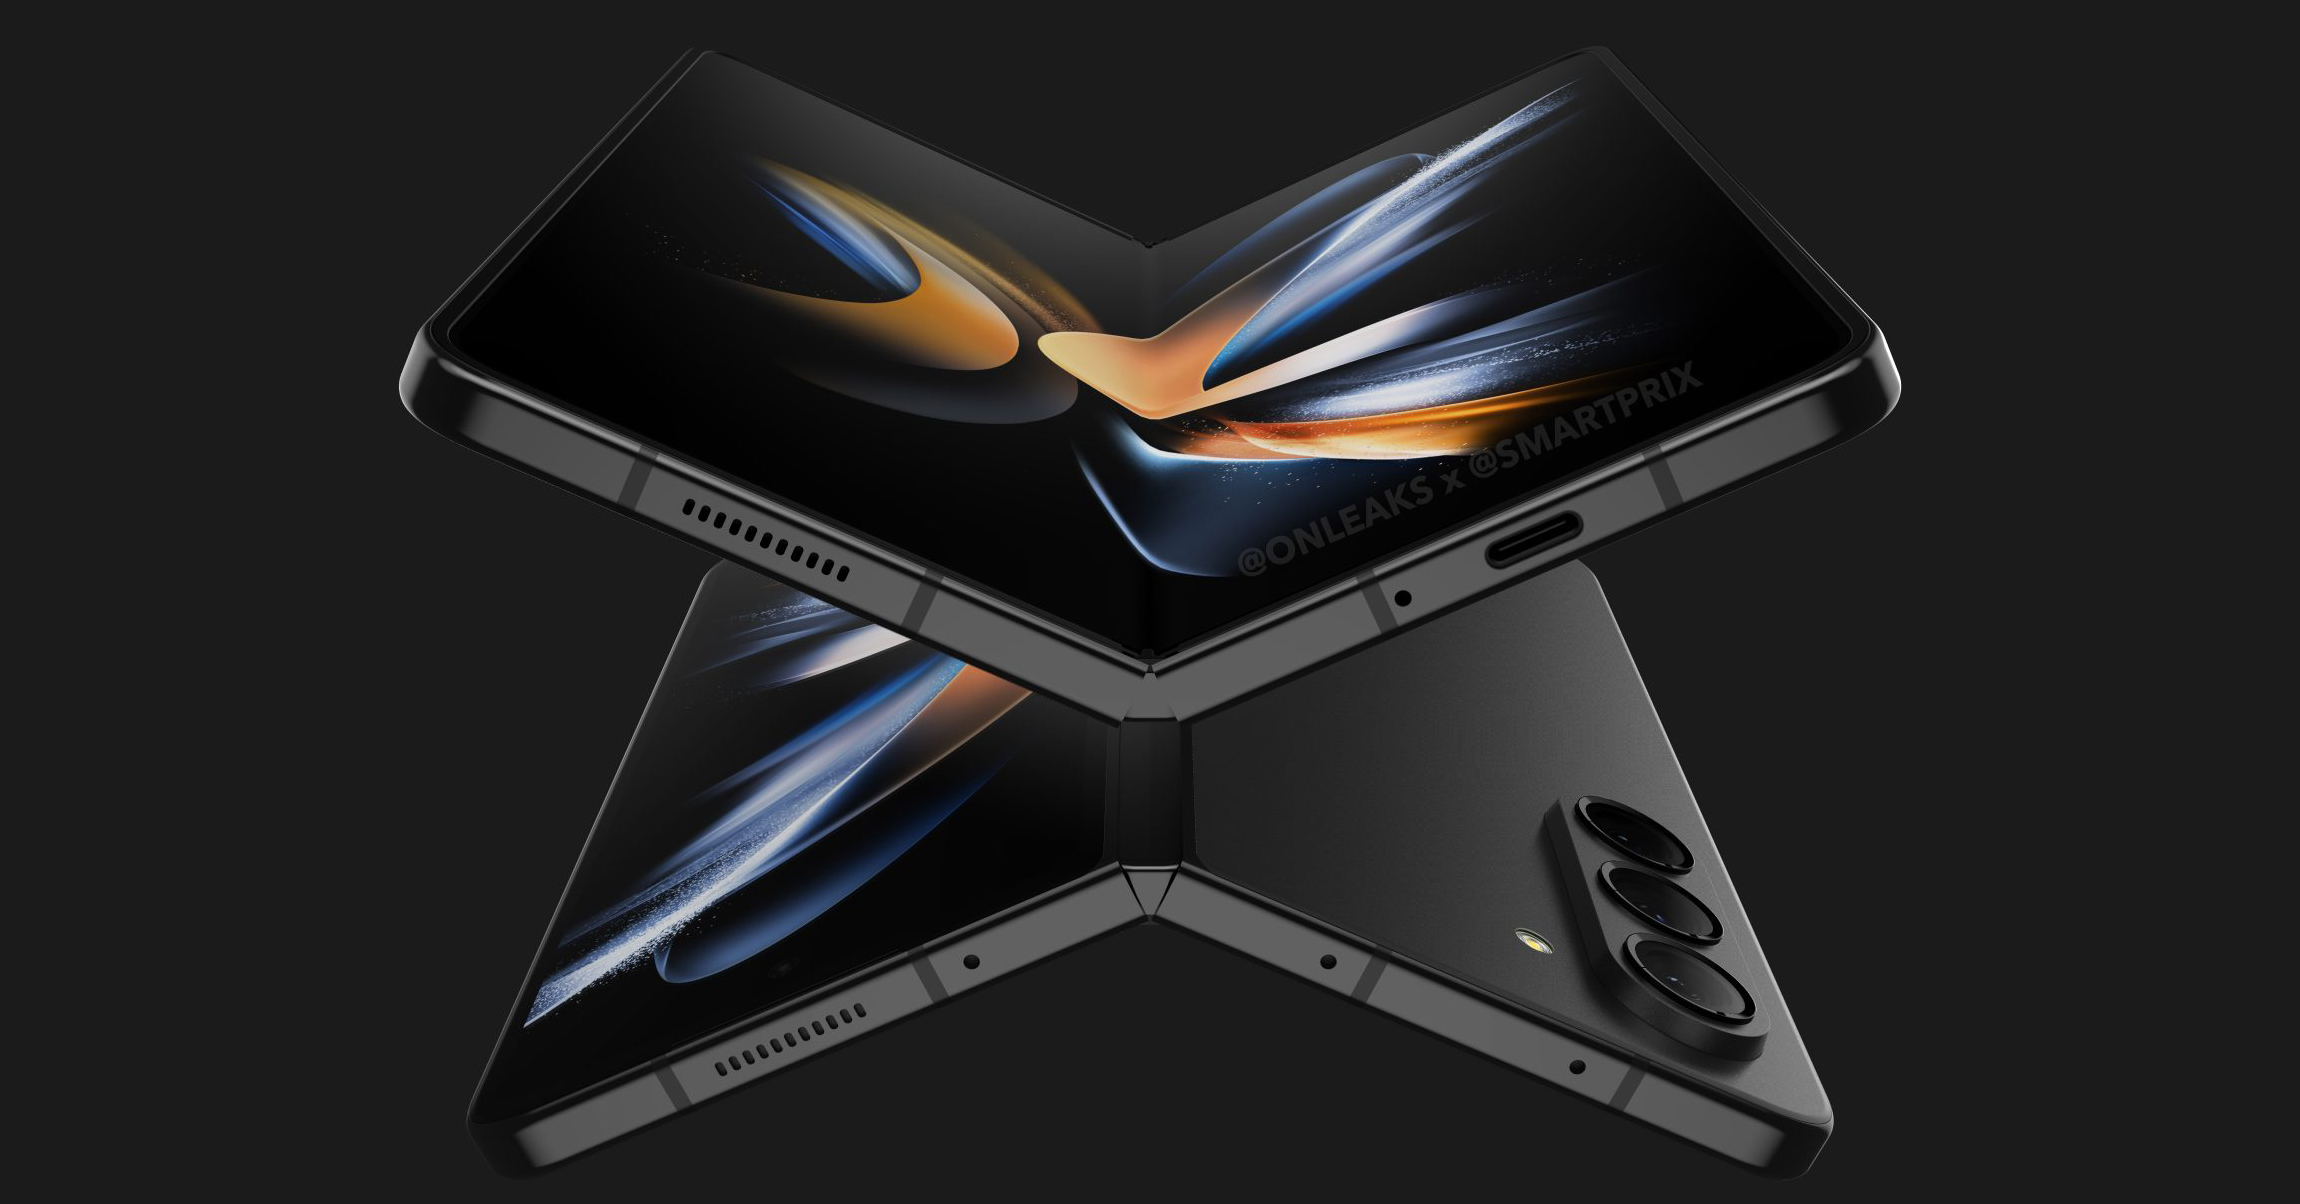 Samsung Galaxy Z Fold 5 Review